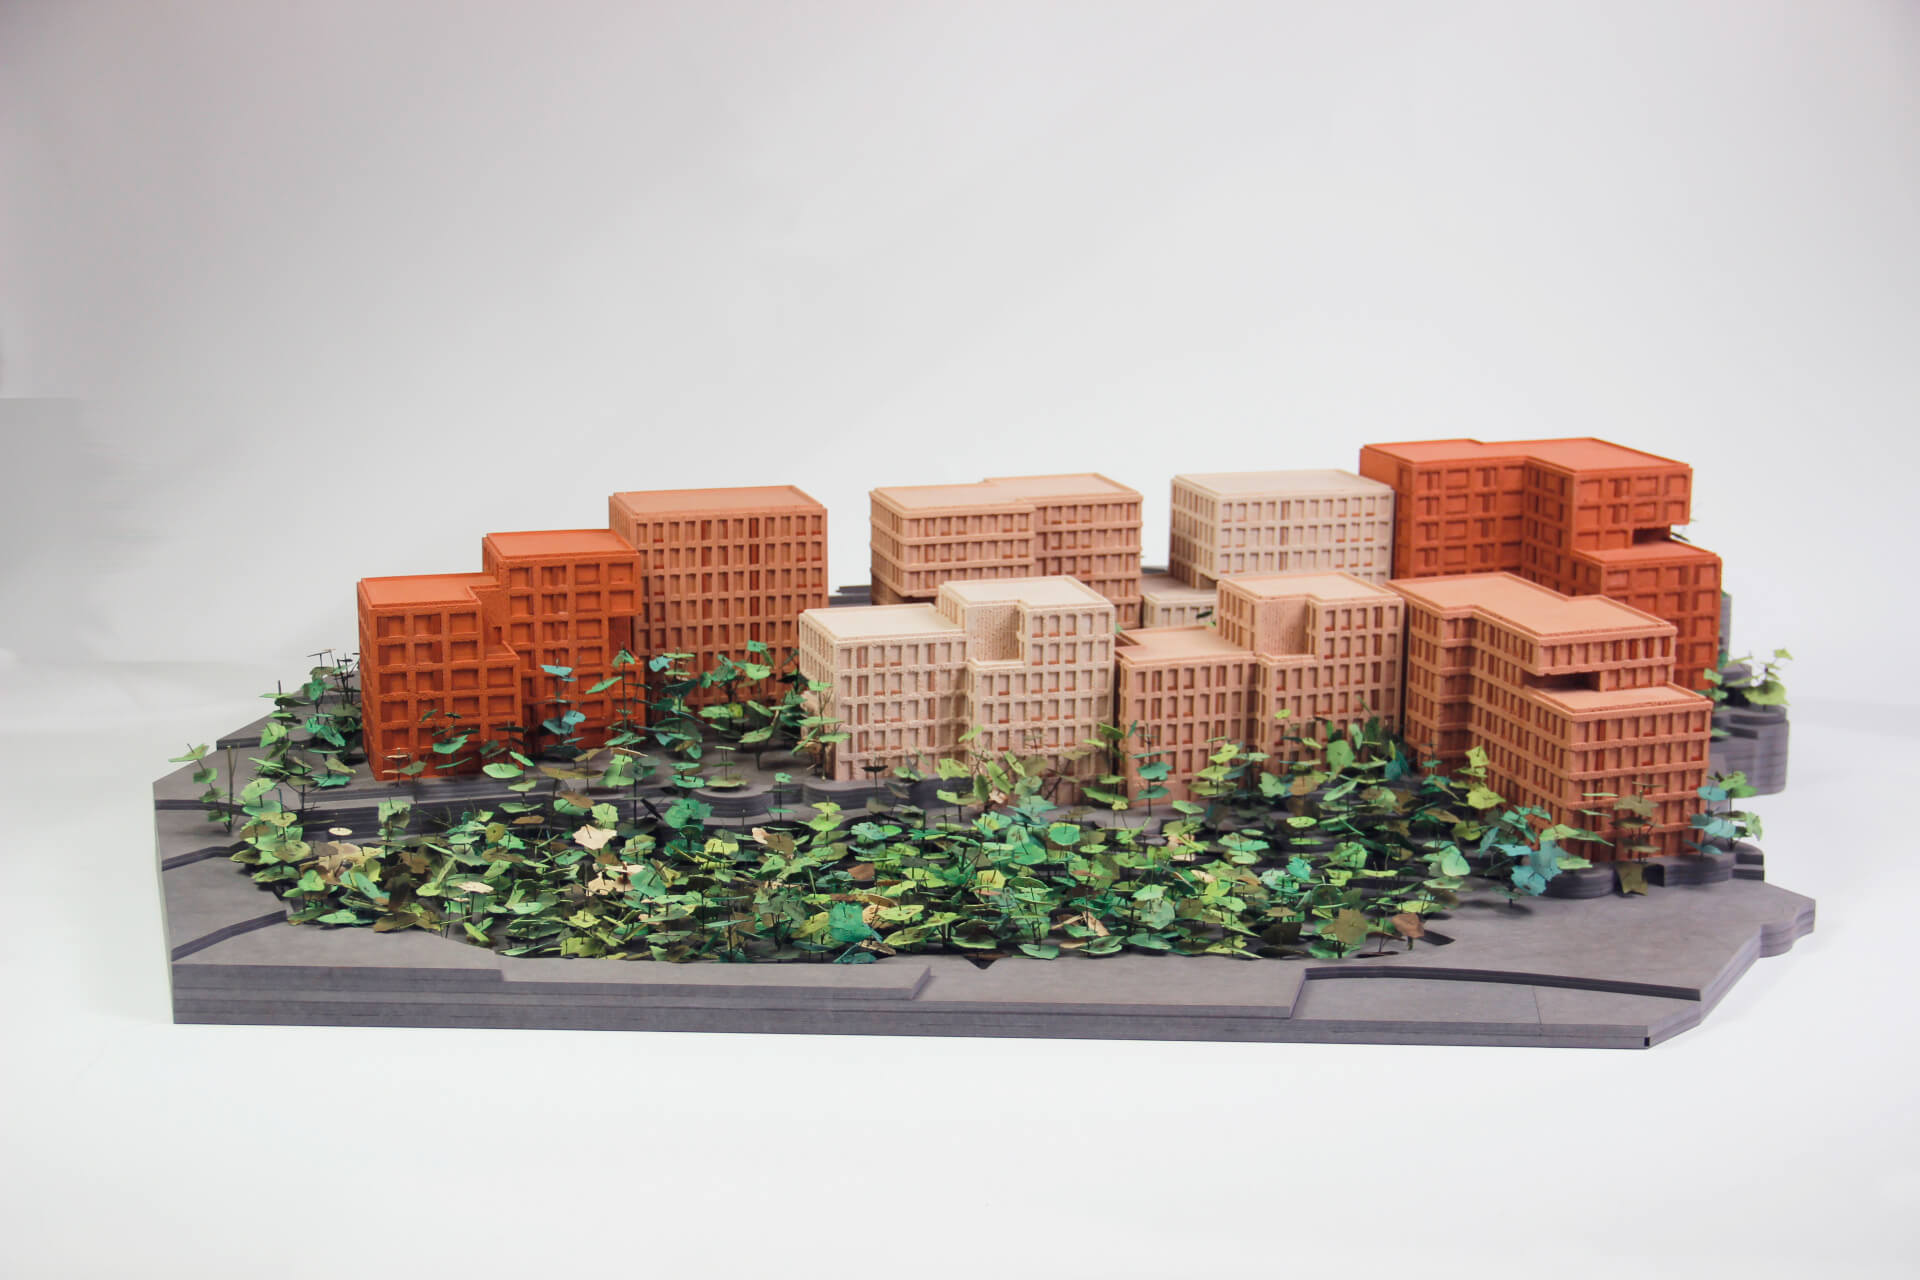 Site model of a 9-tower housing block from Tatiana Bilbao Estudio in quito